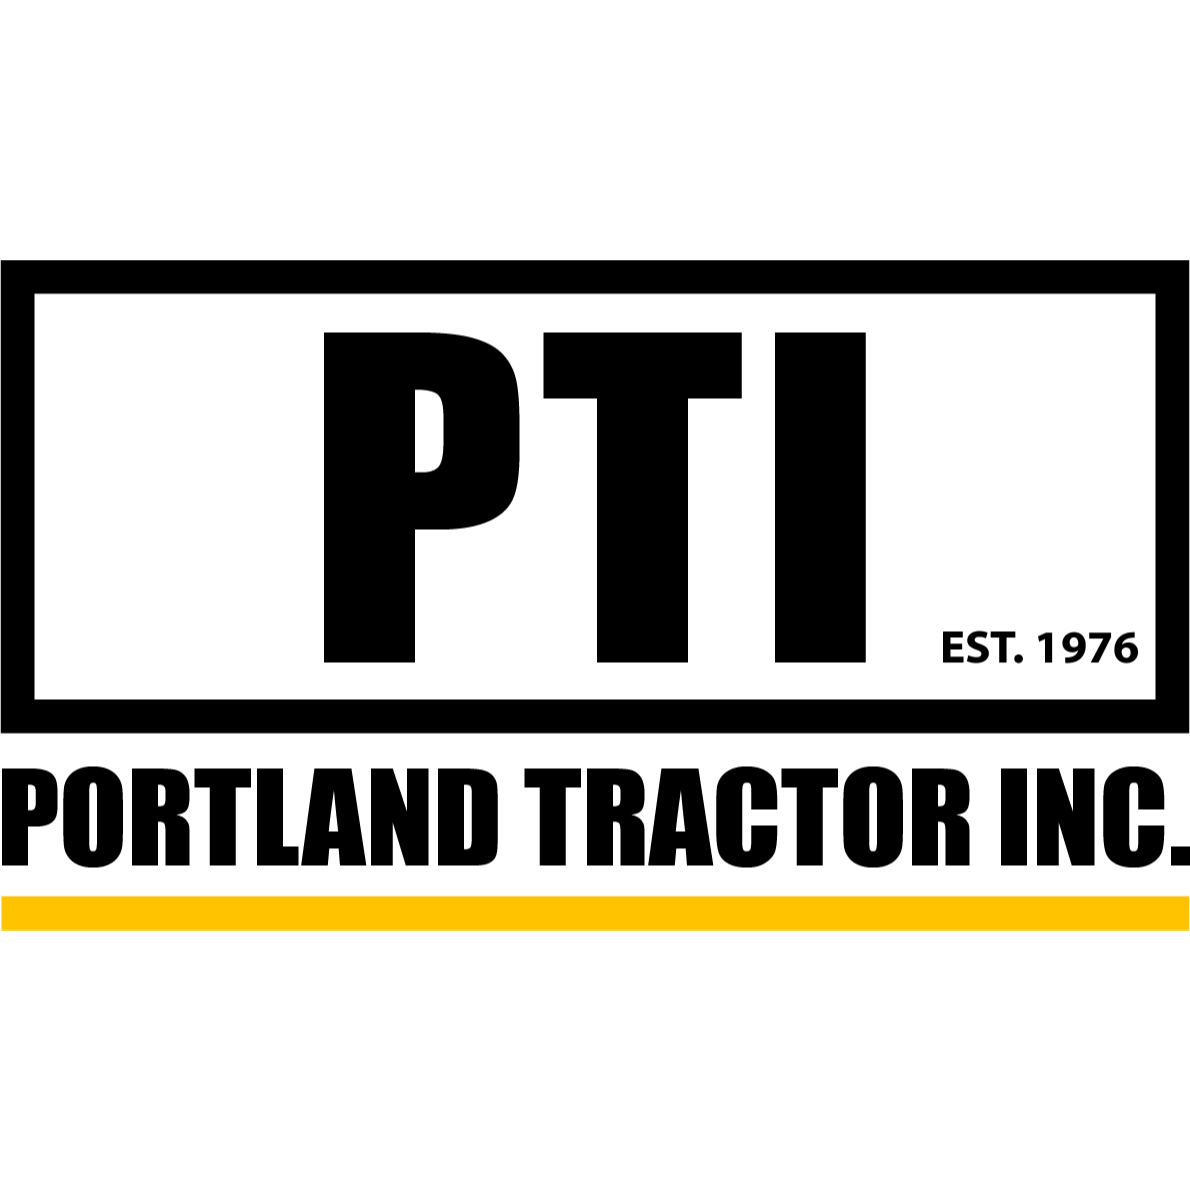 Portland Tractor, Inc. - PTI